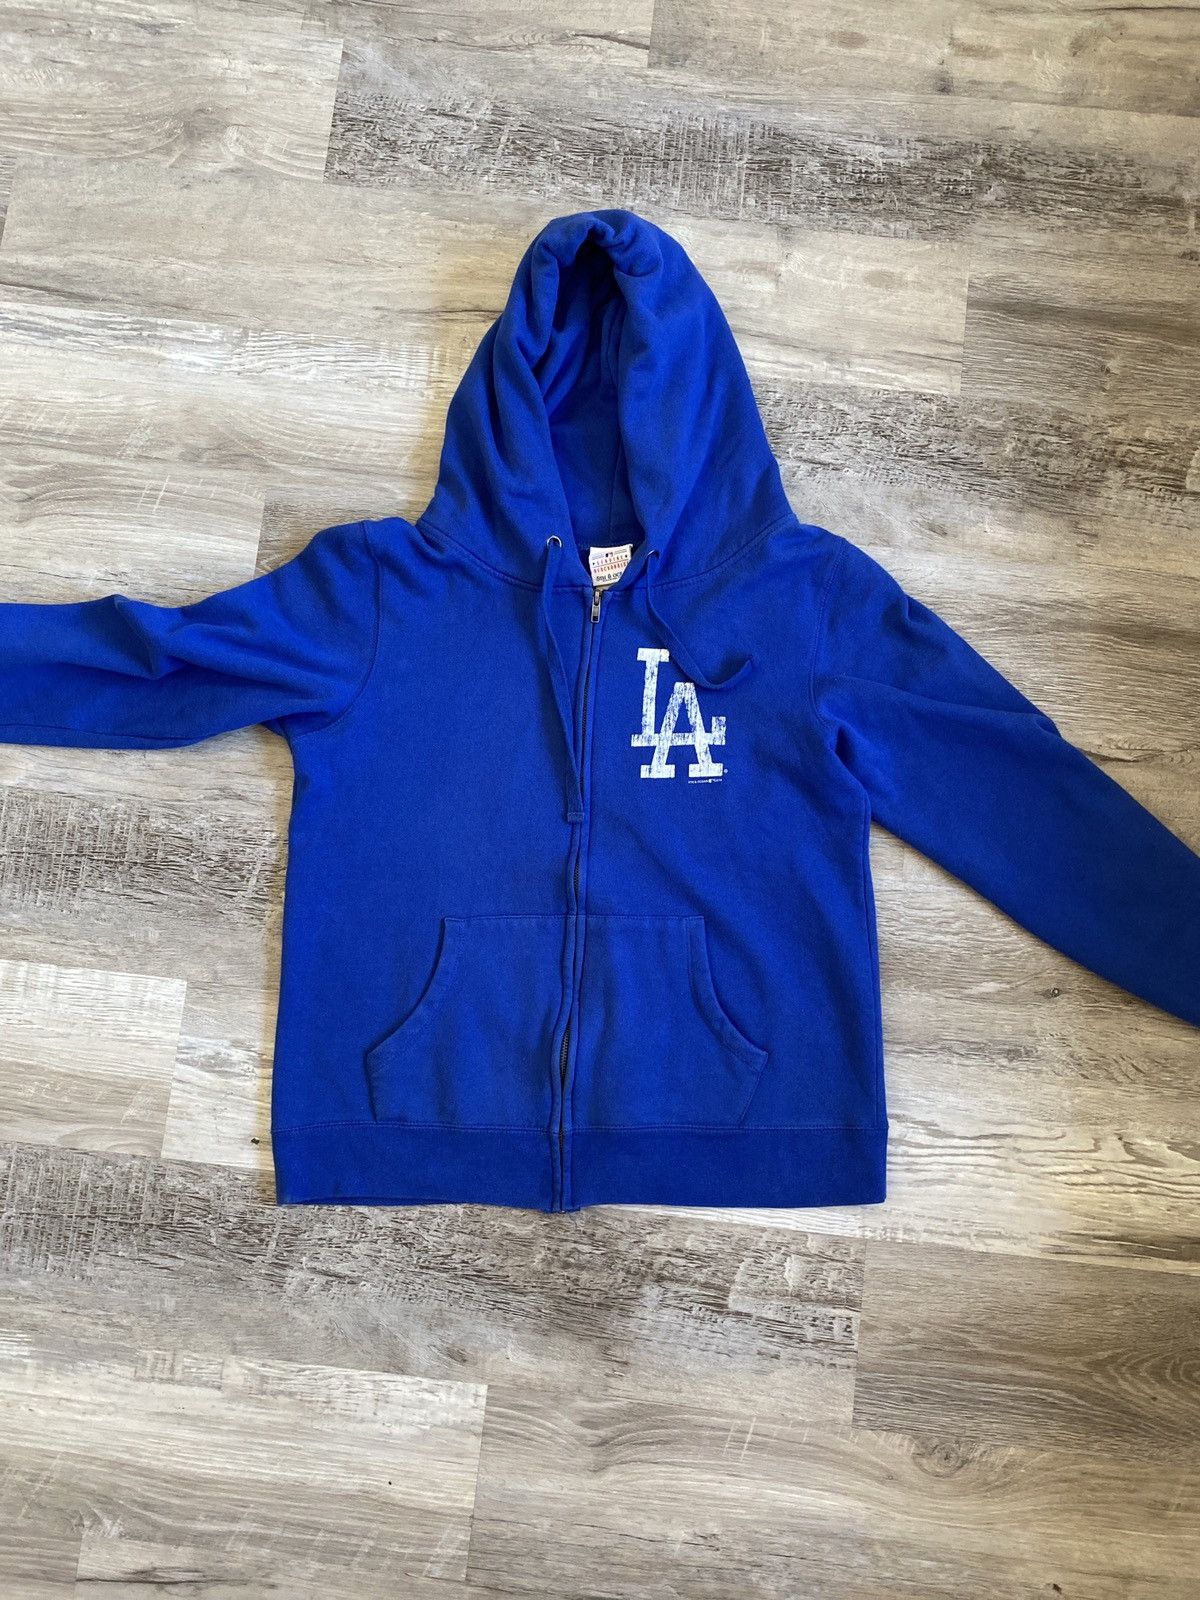 MLB LA Dodgers Women’s Hoodie Size XL / US 12-14 / IT 48-50 - 1 Preview